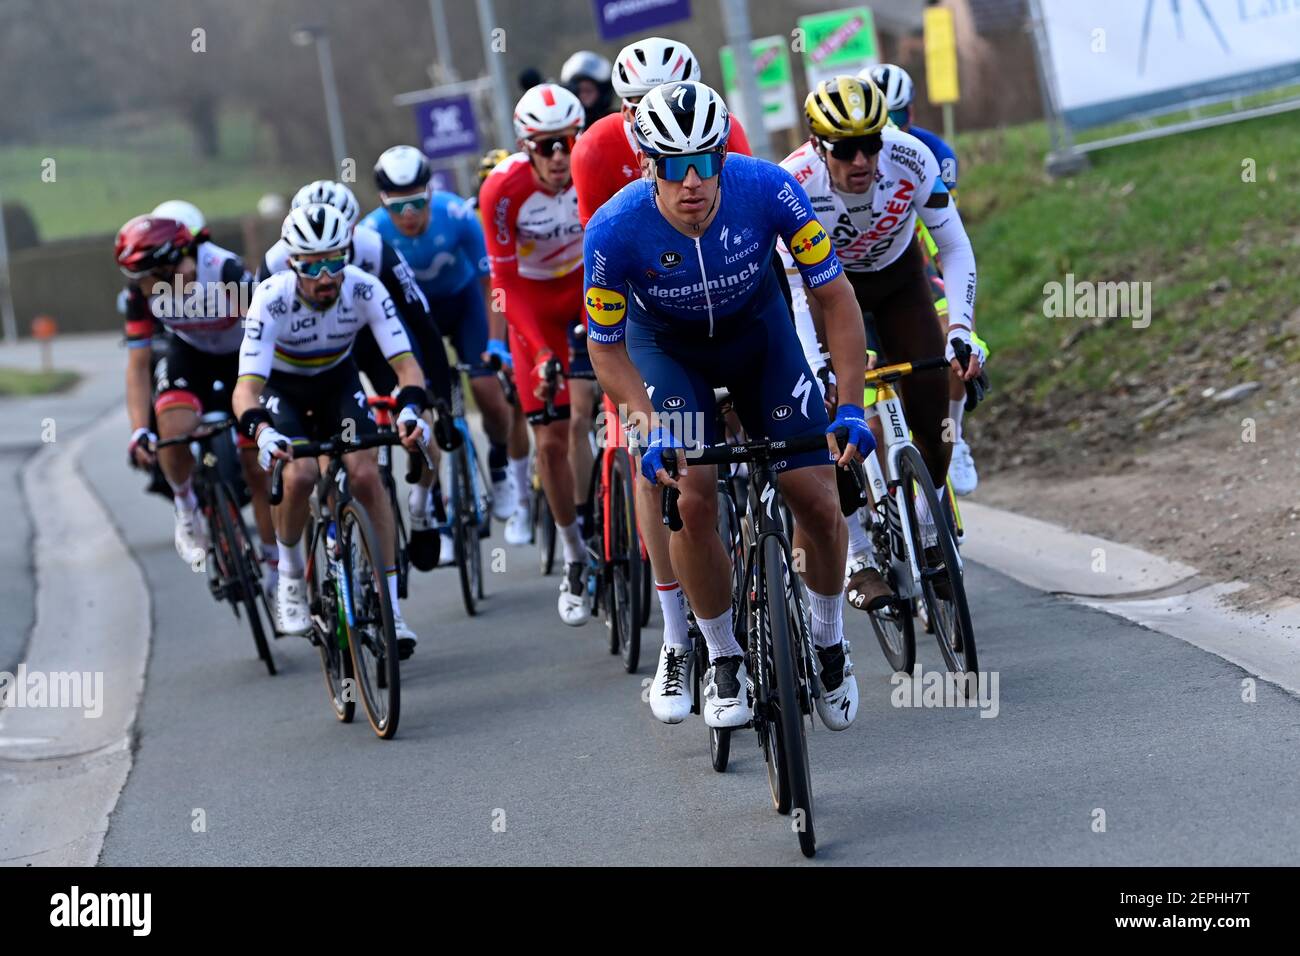 Wielrennen cyclisme omloop nb het volk belgapool hi-res stock photography  and images - Alamy